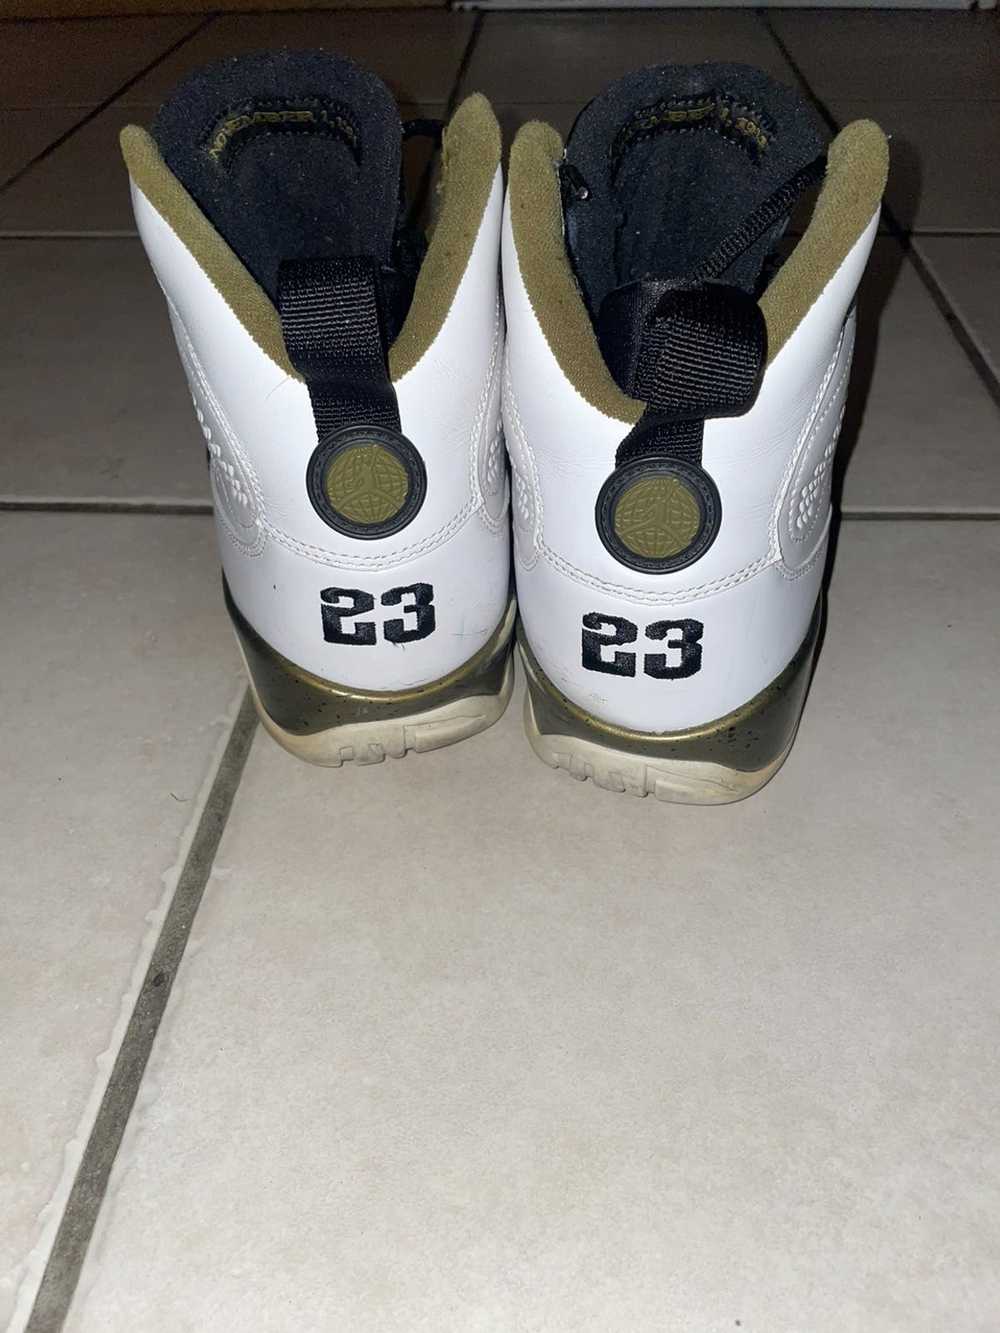 Jordan Brand × Nike Retro 9 “Statue” - image 4